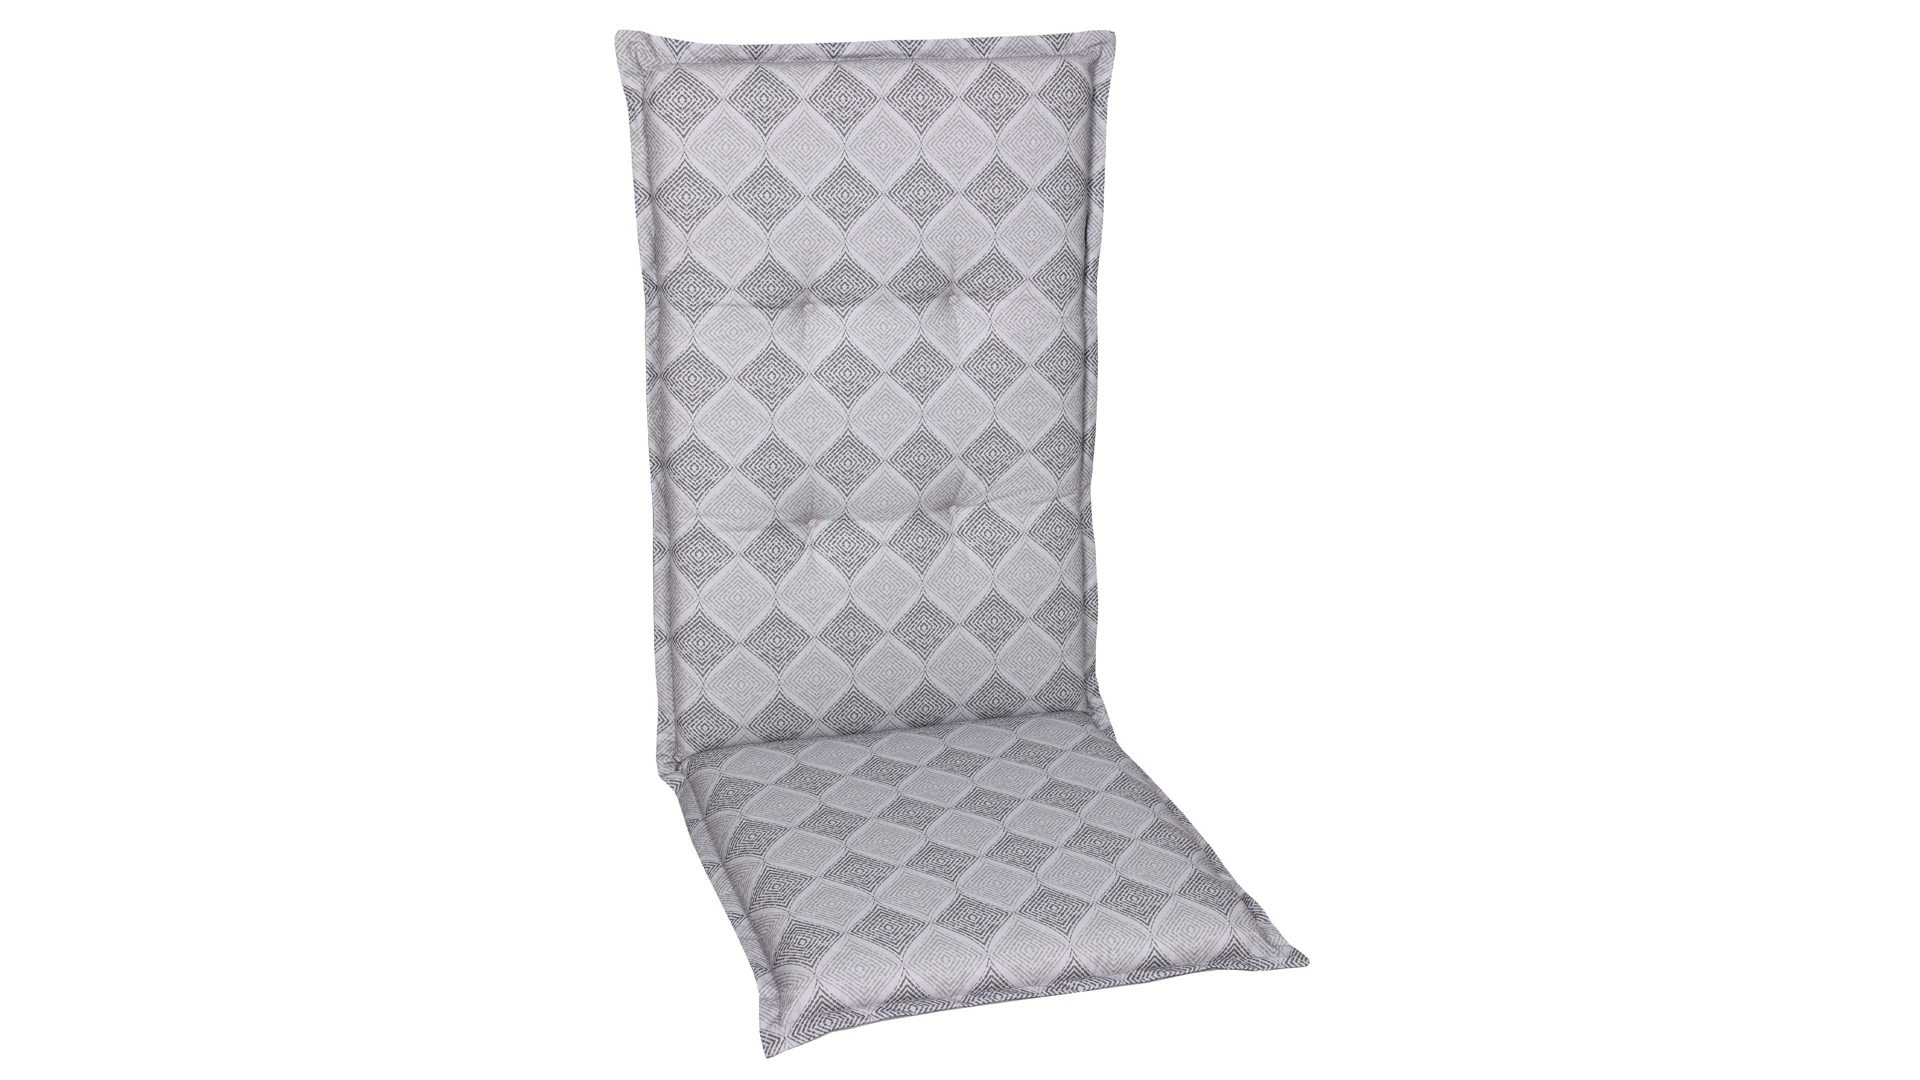 Polsterauflage Go-de textil aus Stoff in Grau GO-DE TEXTIL Auflagen Serie 19 - Sesselauflage graue Rautenlinien - ca. 50 x 120 cm